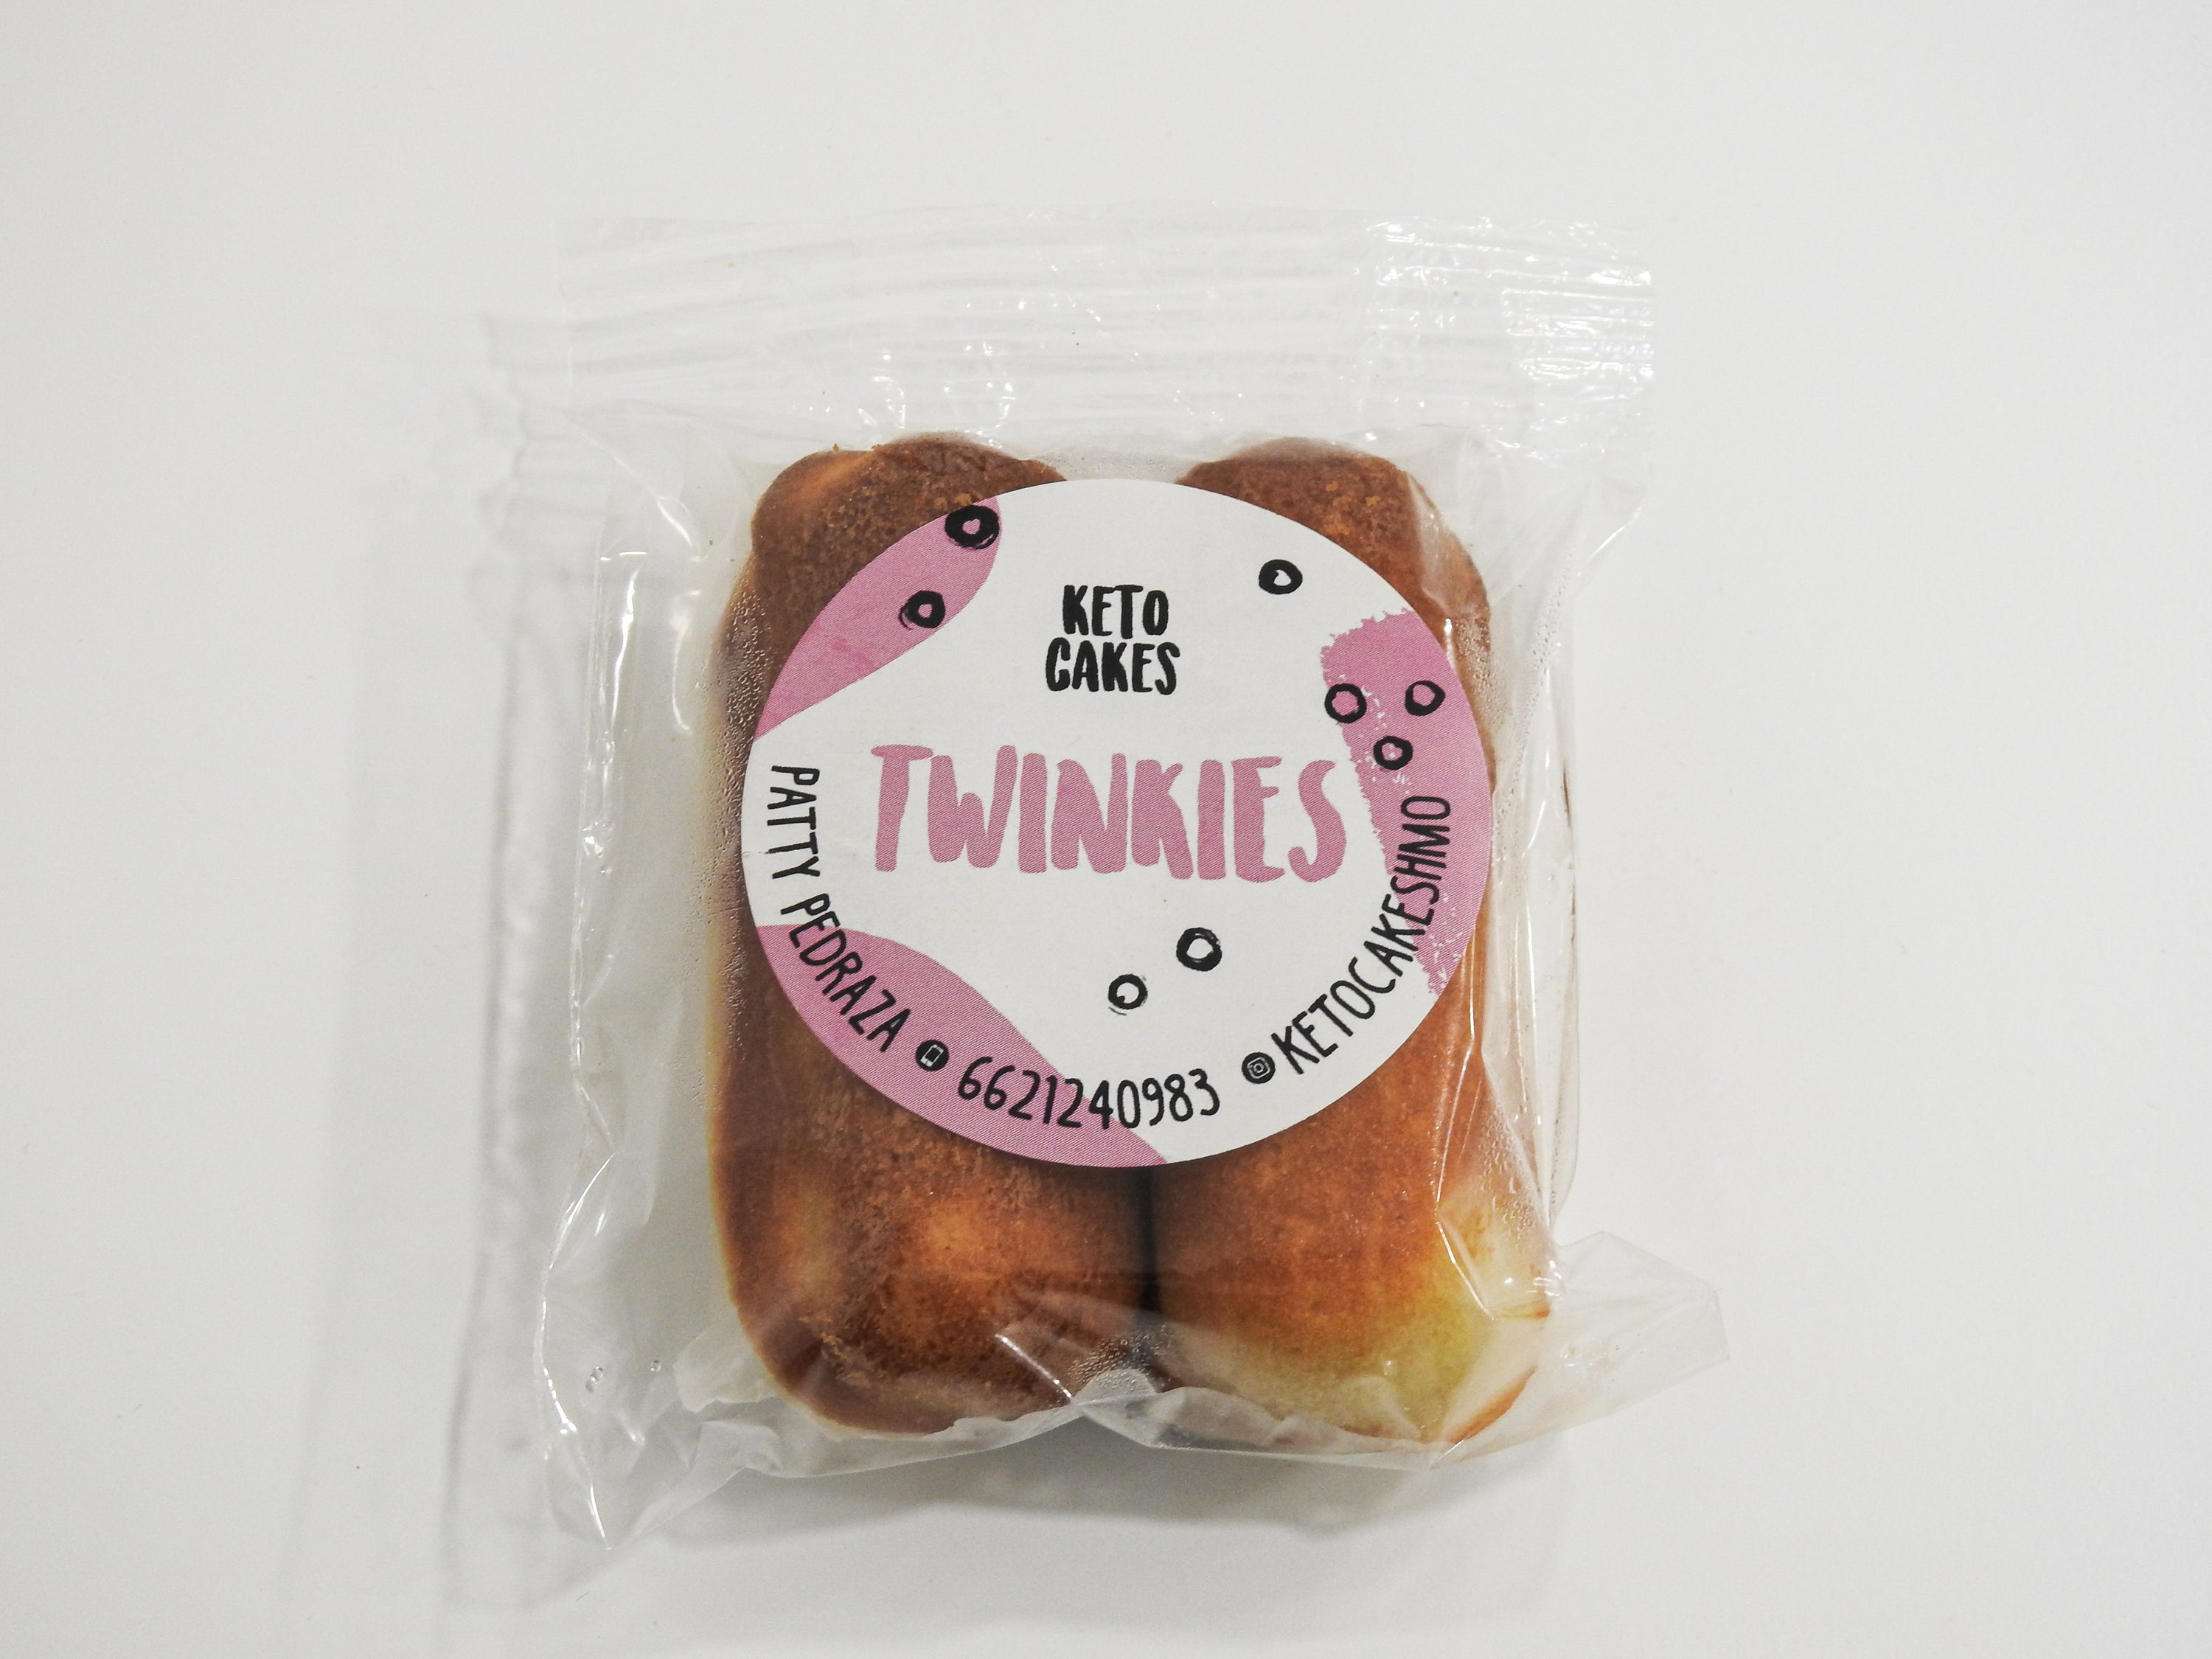 Twinkies Keto